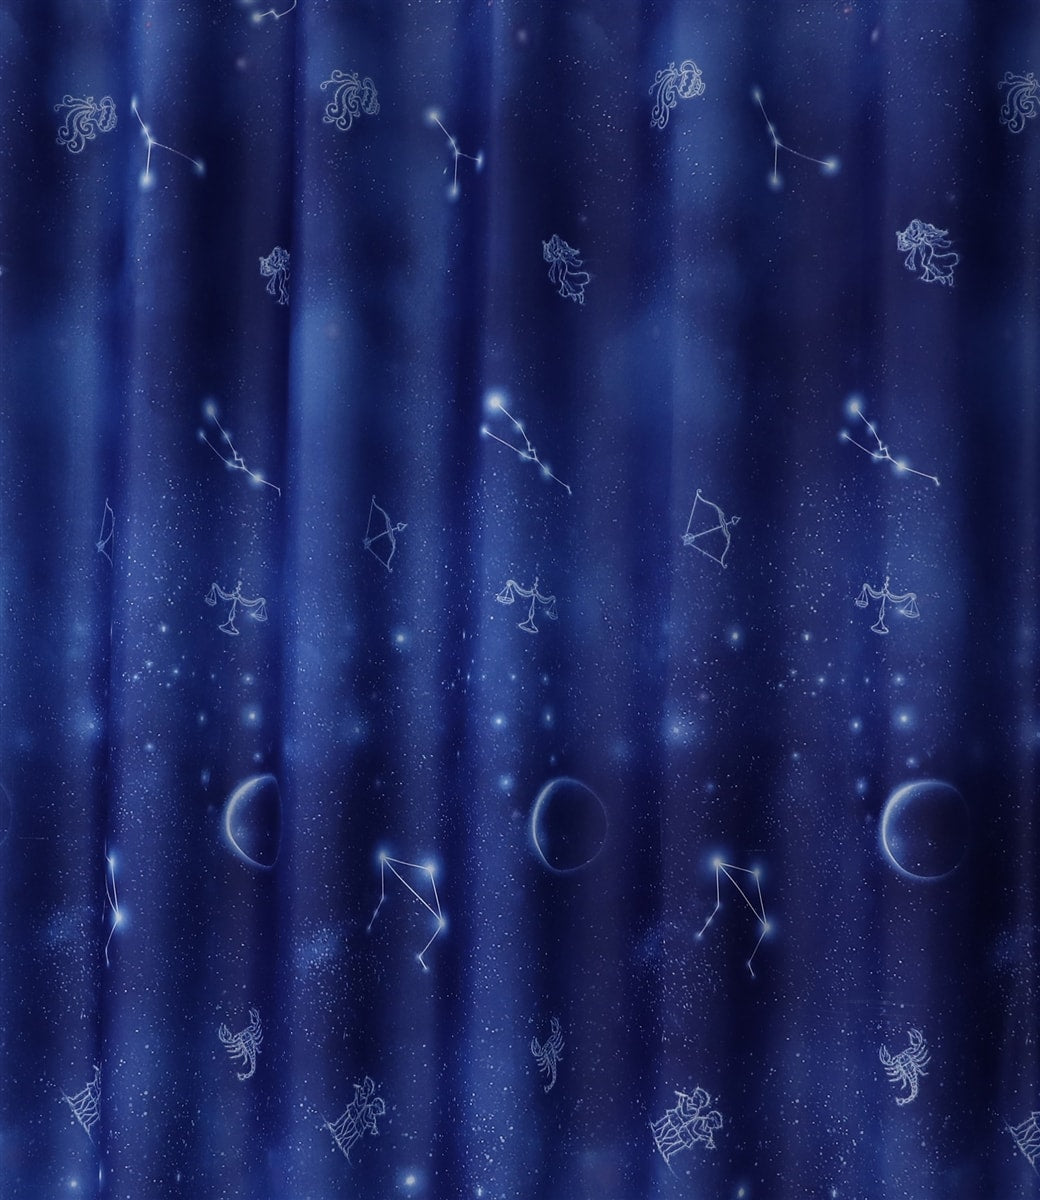 Night Sky Zodiac Blockout Eyelet Curtains - (Blue)